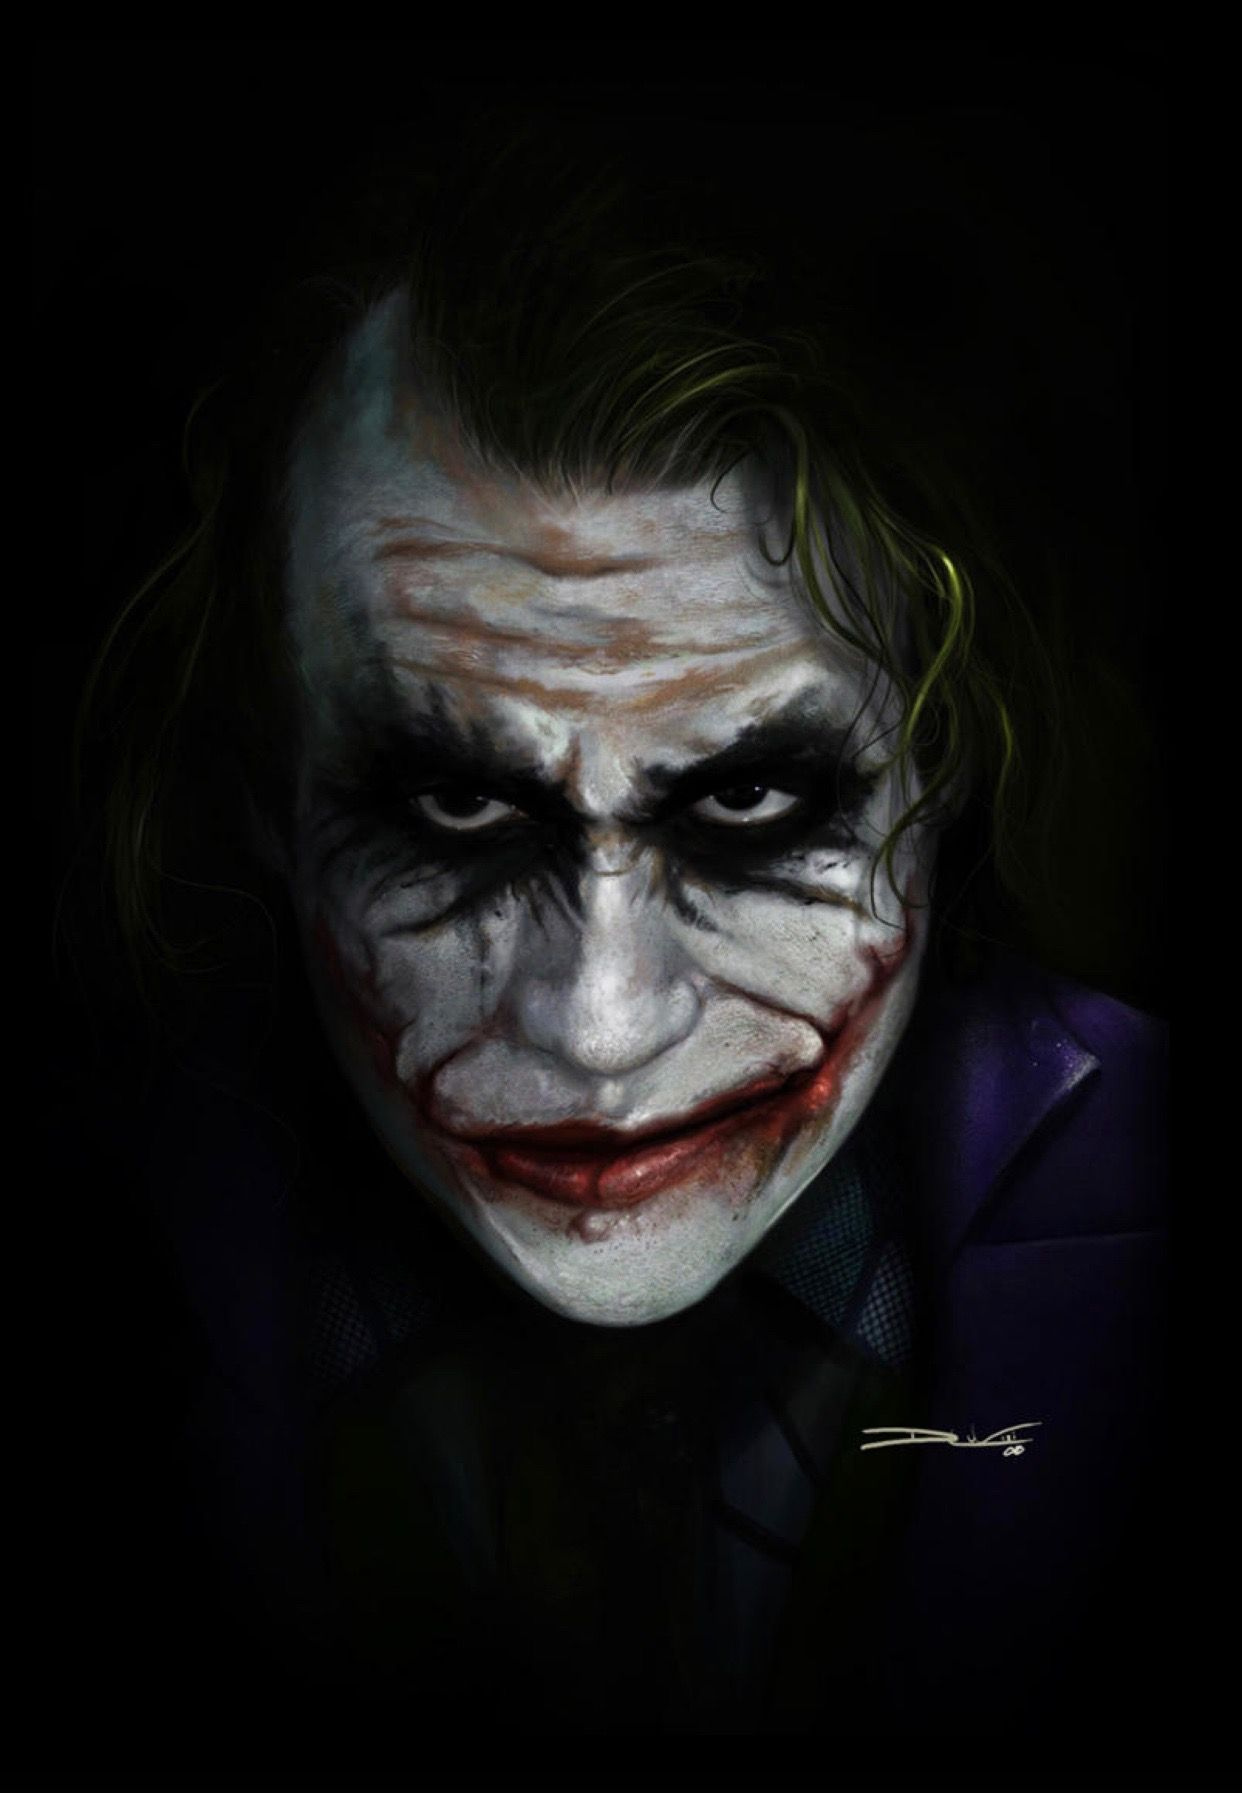 Joker face wallpapers download